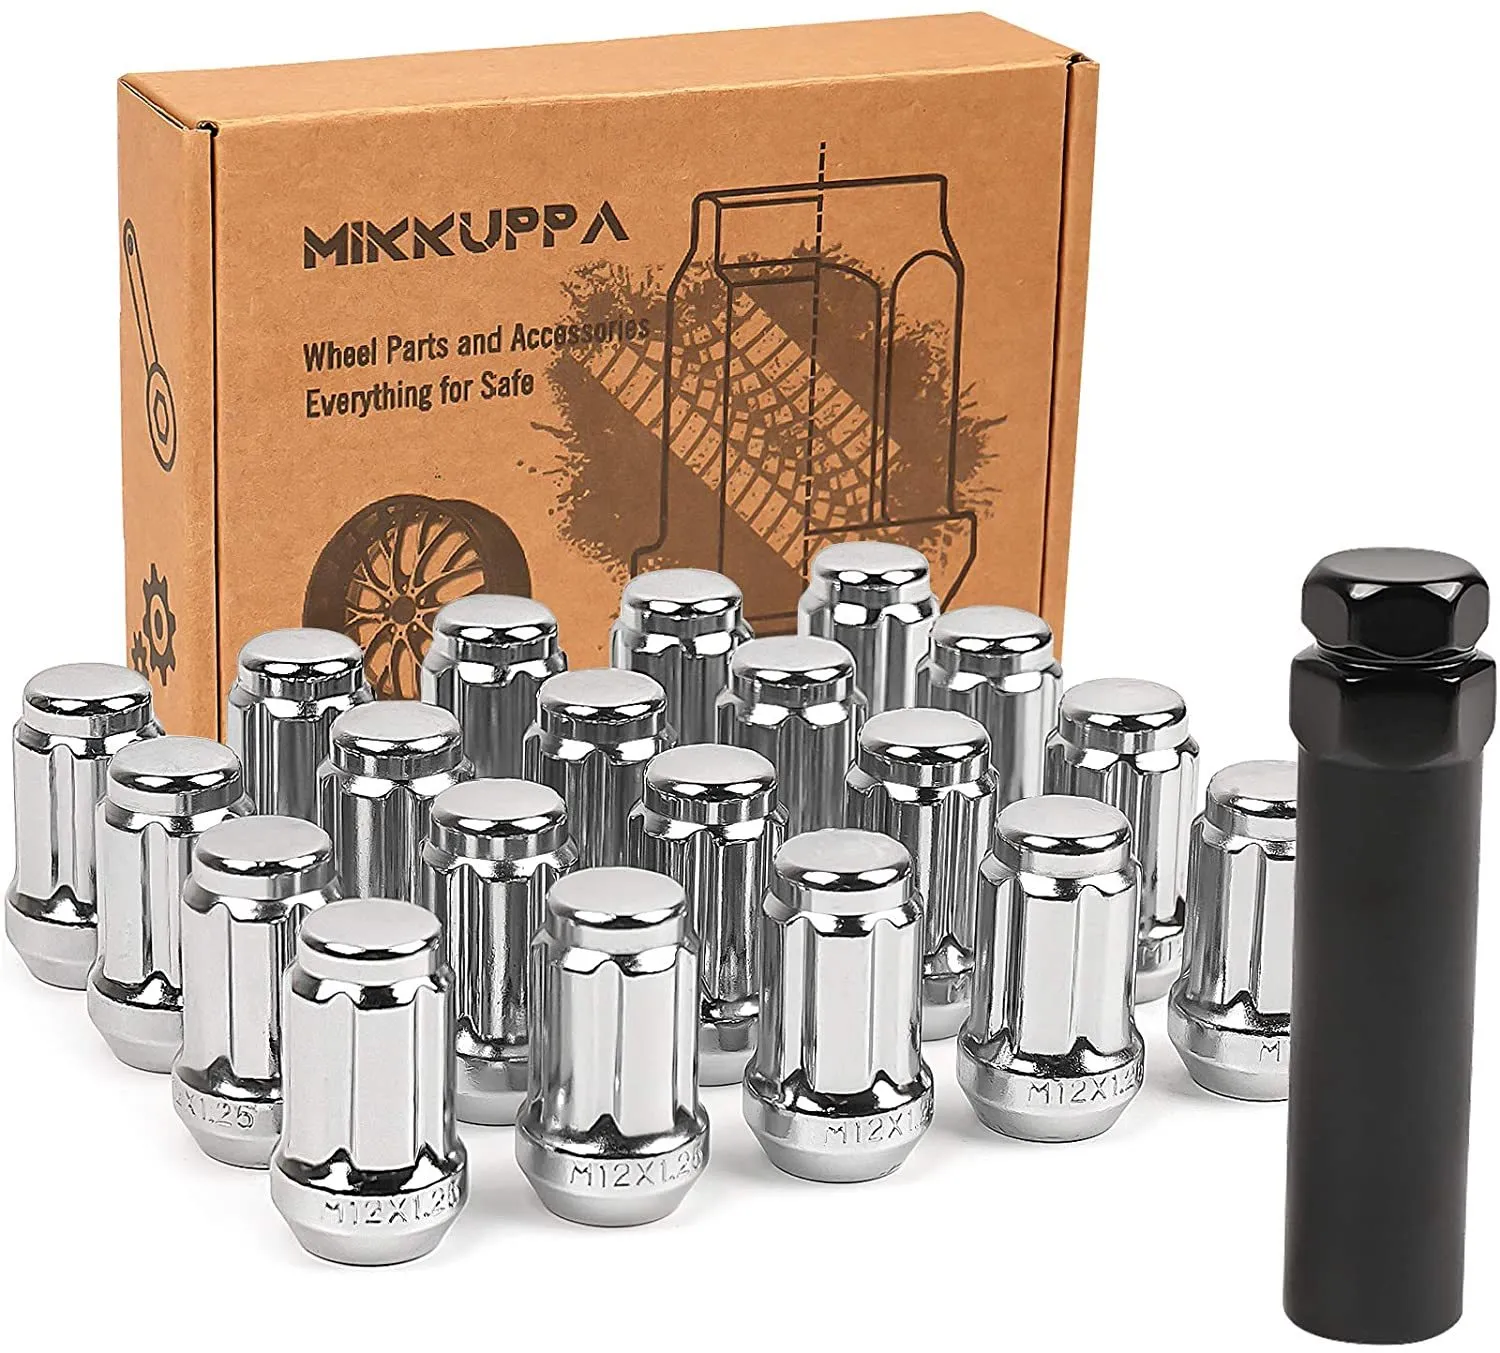 Mikkuppa M12x1.25 ل Infiniti / Altima / Maxima / Subaru ما بعد البيع عجلة 20 قطع الكروم مغلقة نهاية العروة المكسرات